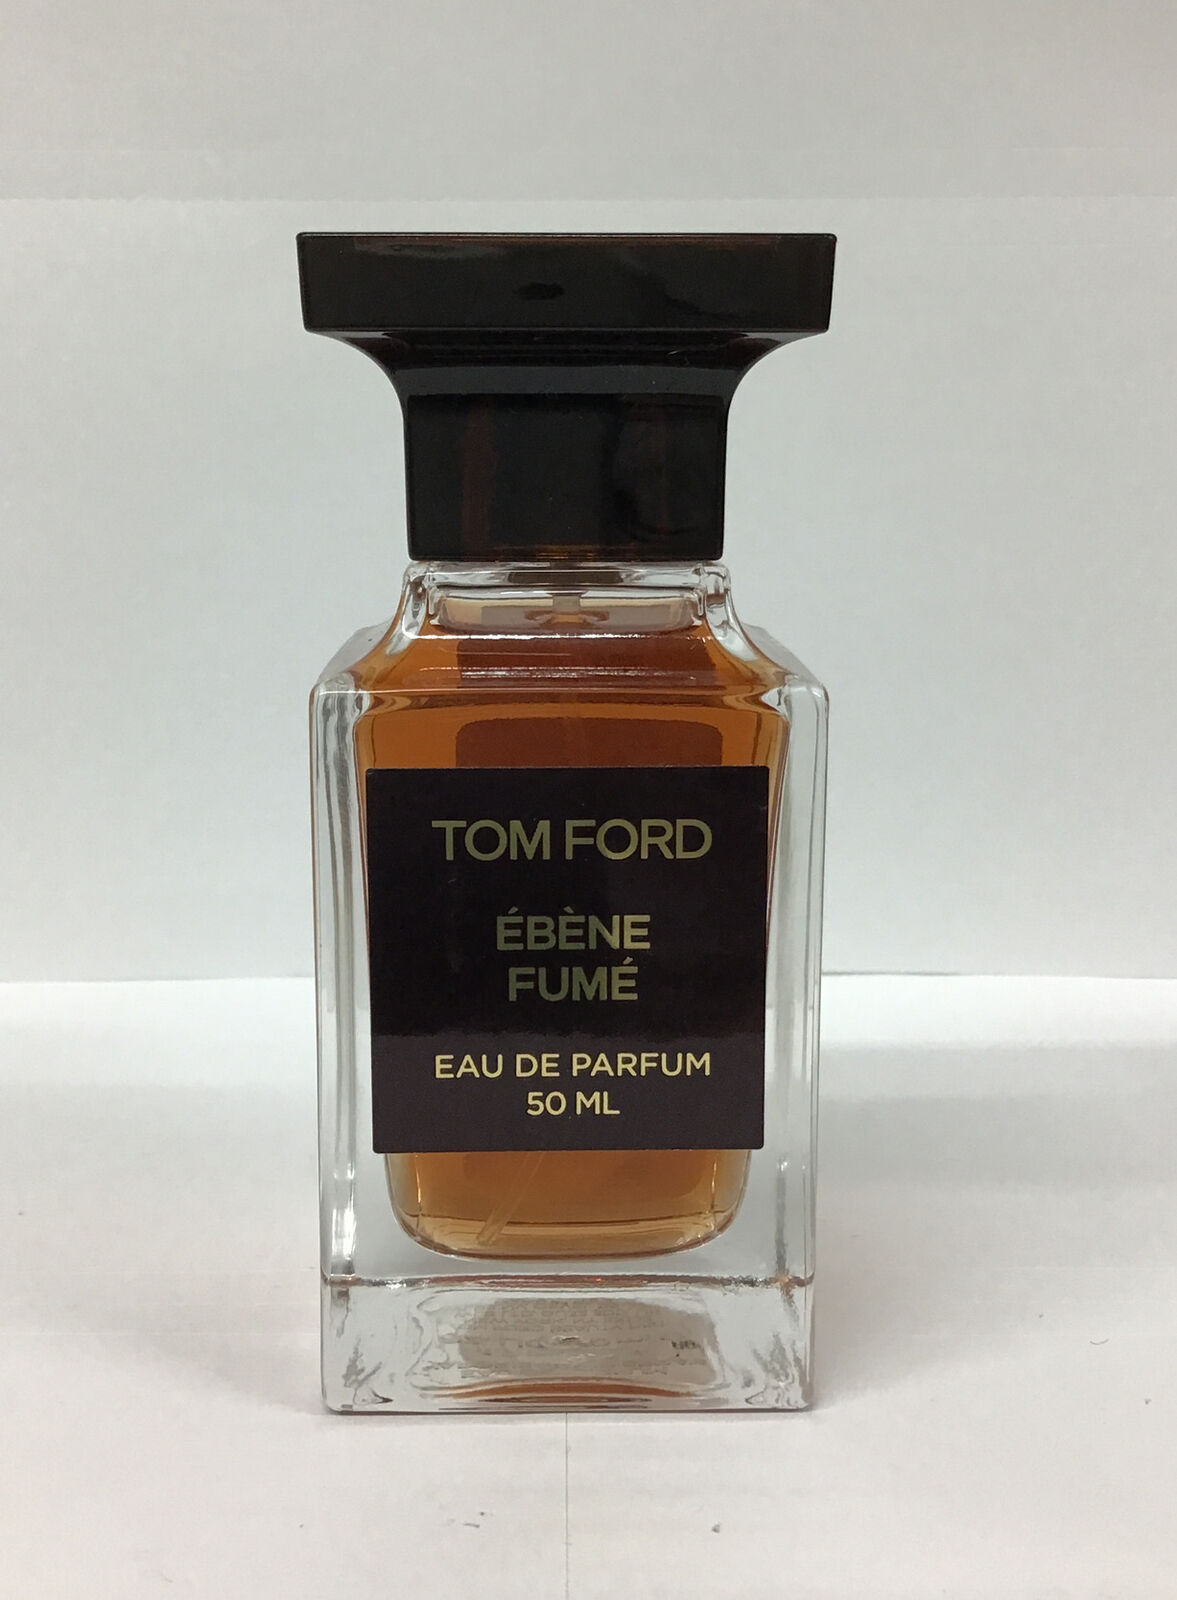 Tom Ford Ebene Fume Eau De Parfum Spray 1.7 Fl Oz/ 50 Ml, As Pictured.